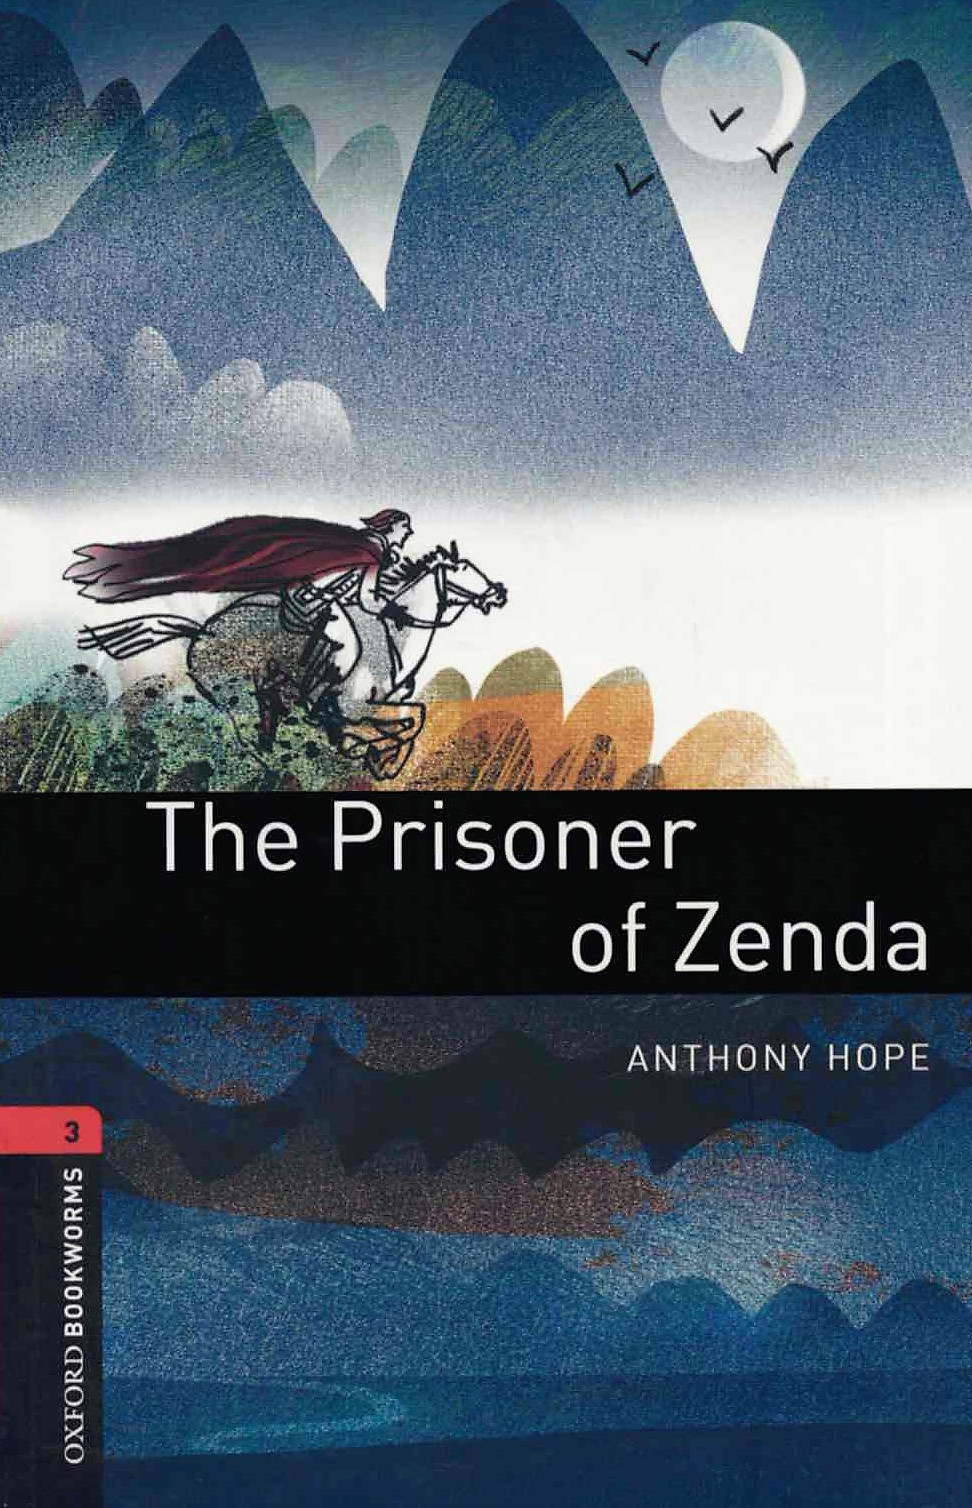 Oxford Bookworms: The Prisoner of Zenda